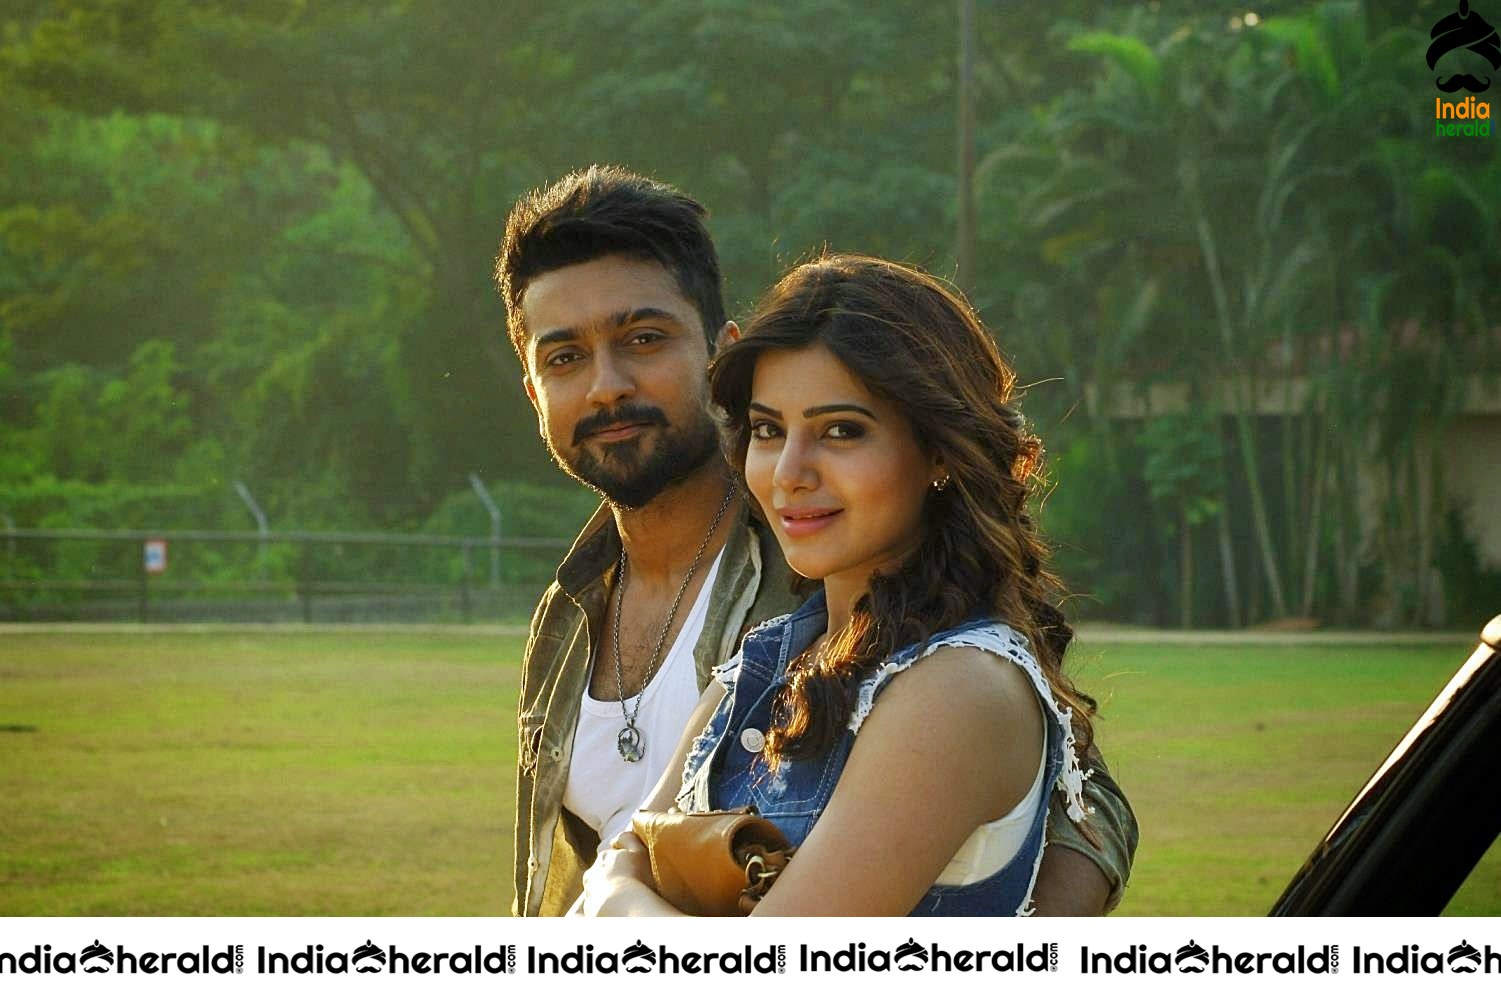 INDIA HERALD EXCLUSIVE Hot Samantha and Surya Unseen Stills from Sikindar Set 5